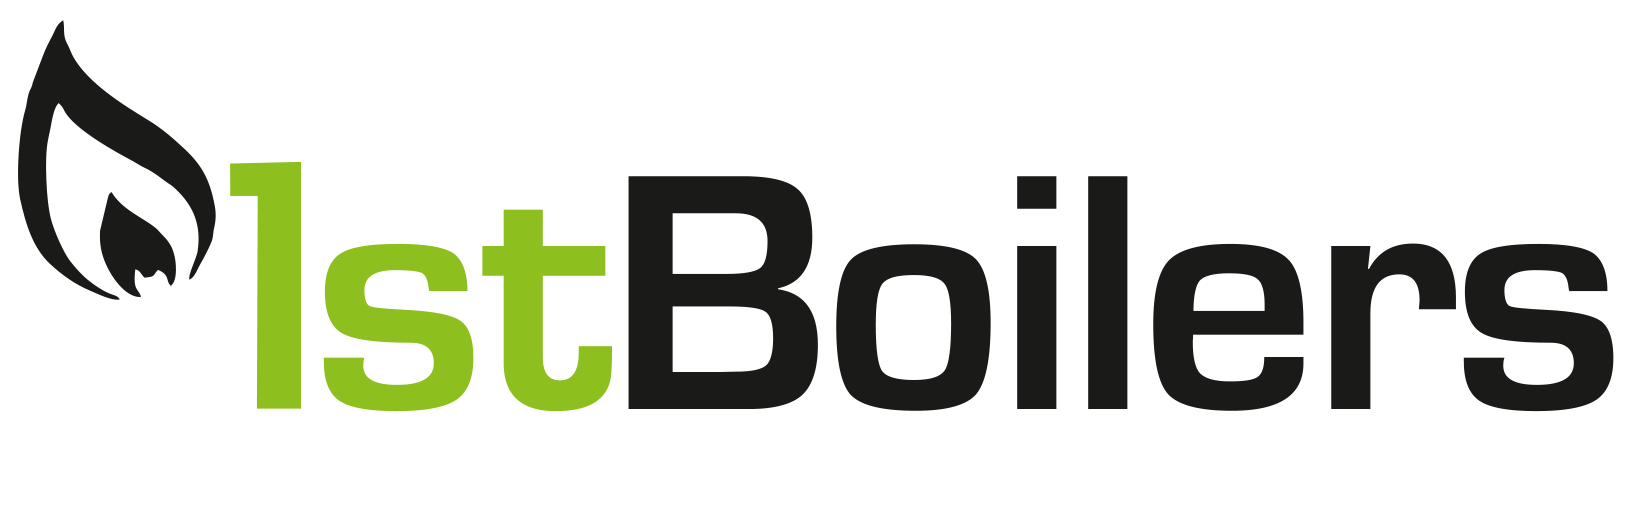 1st-Boilers-Logo-.png